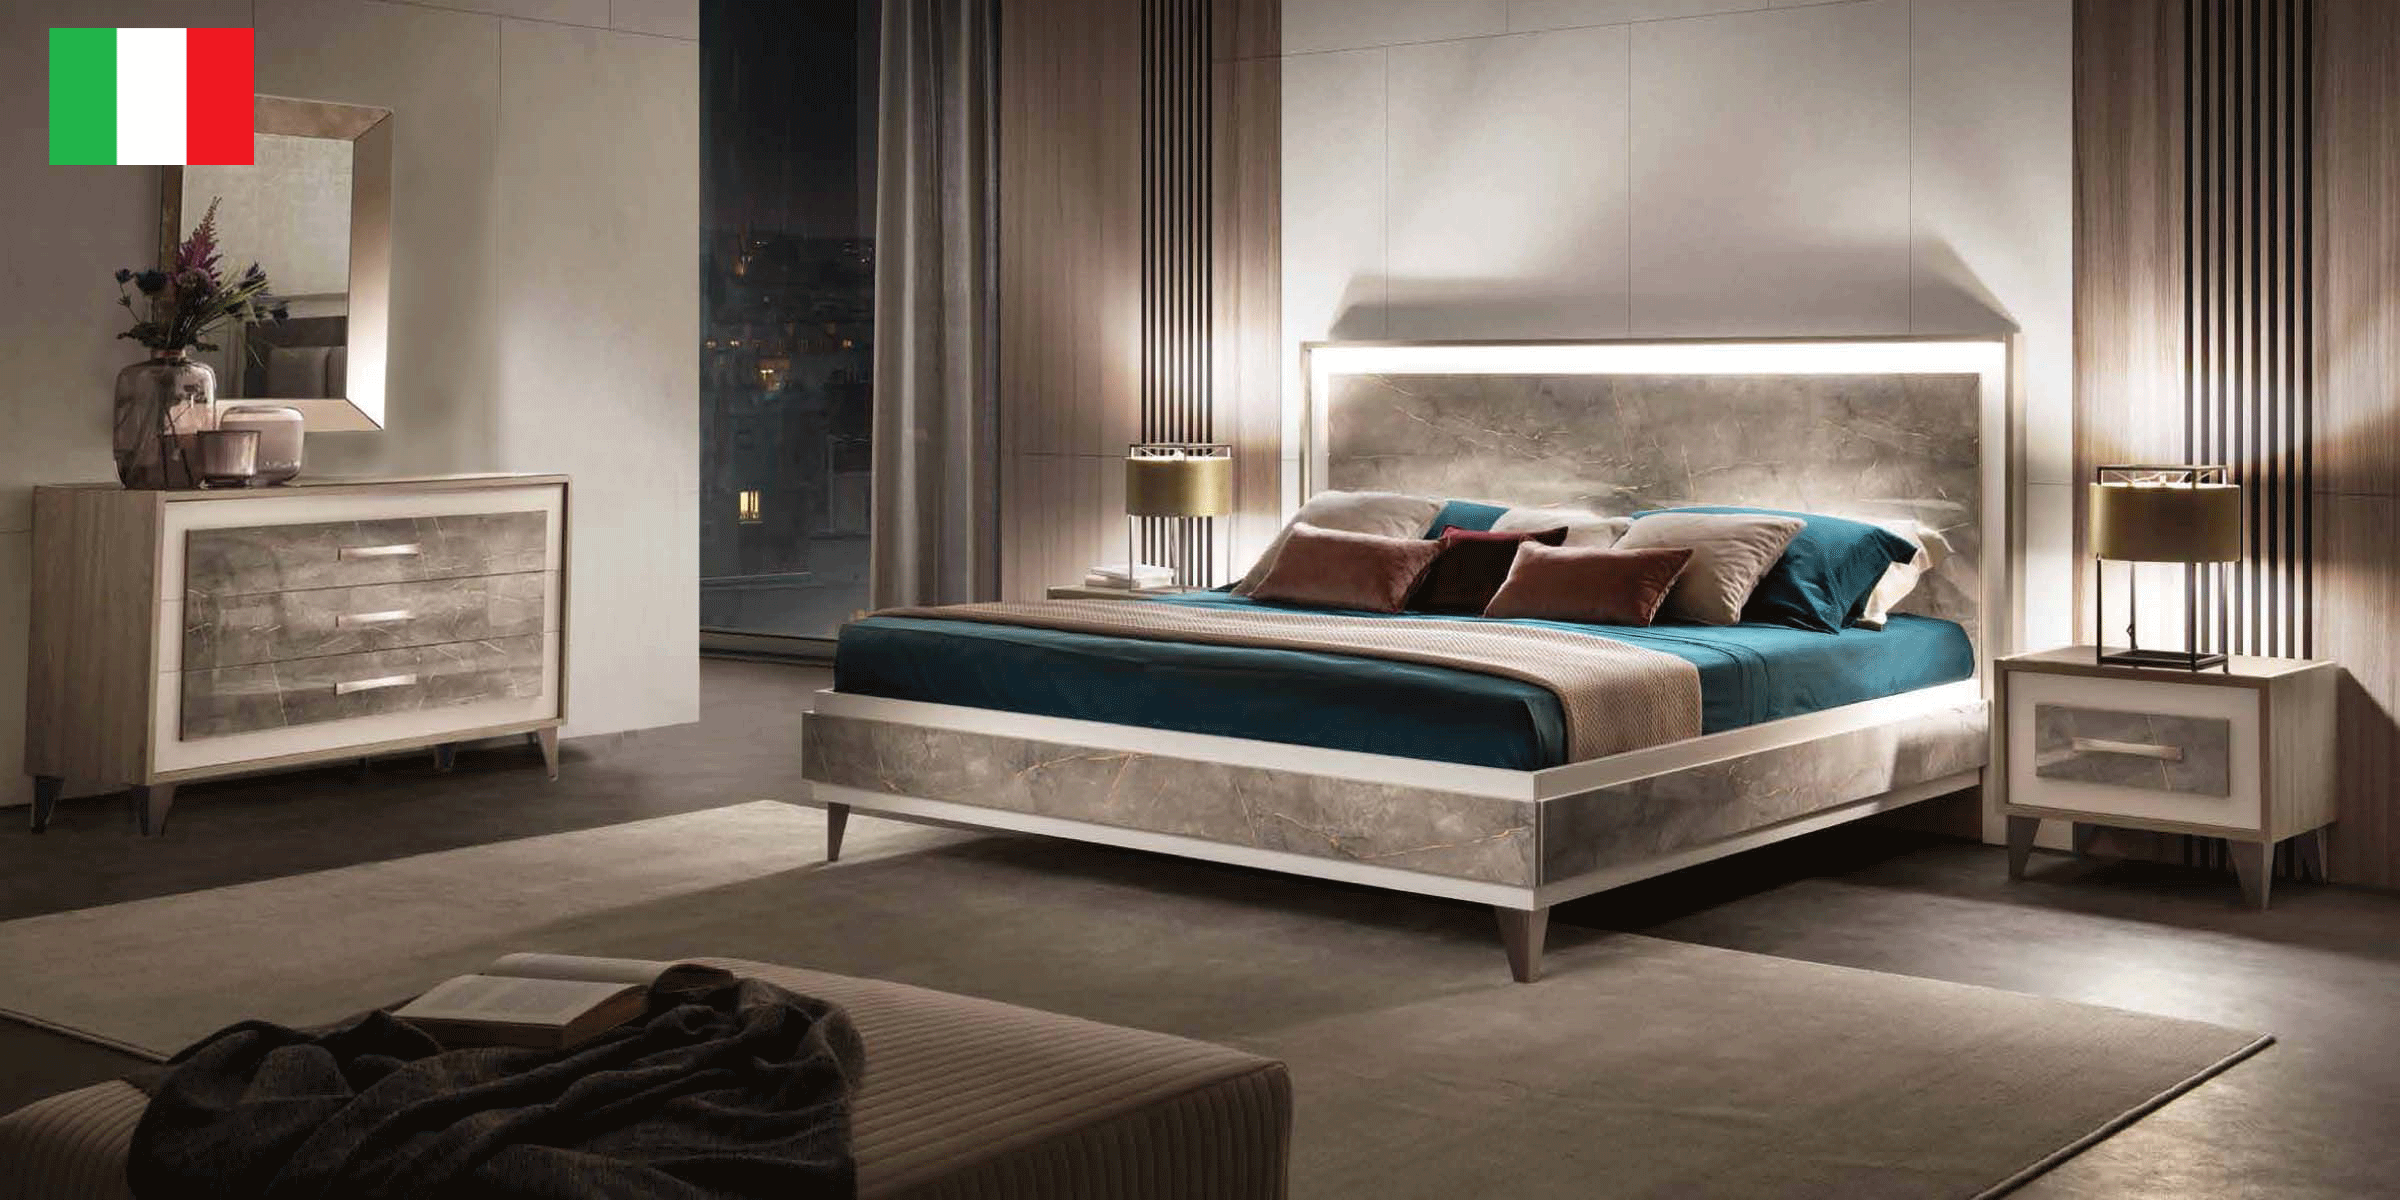 Bedroom Furniture Beds ArredoAmbra Bedroom by Arredoclassic with single dresser